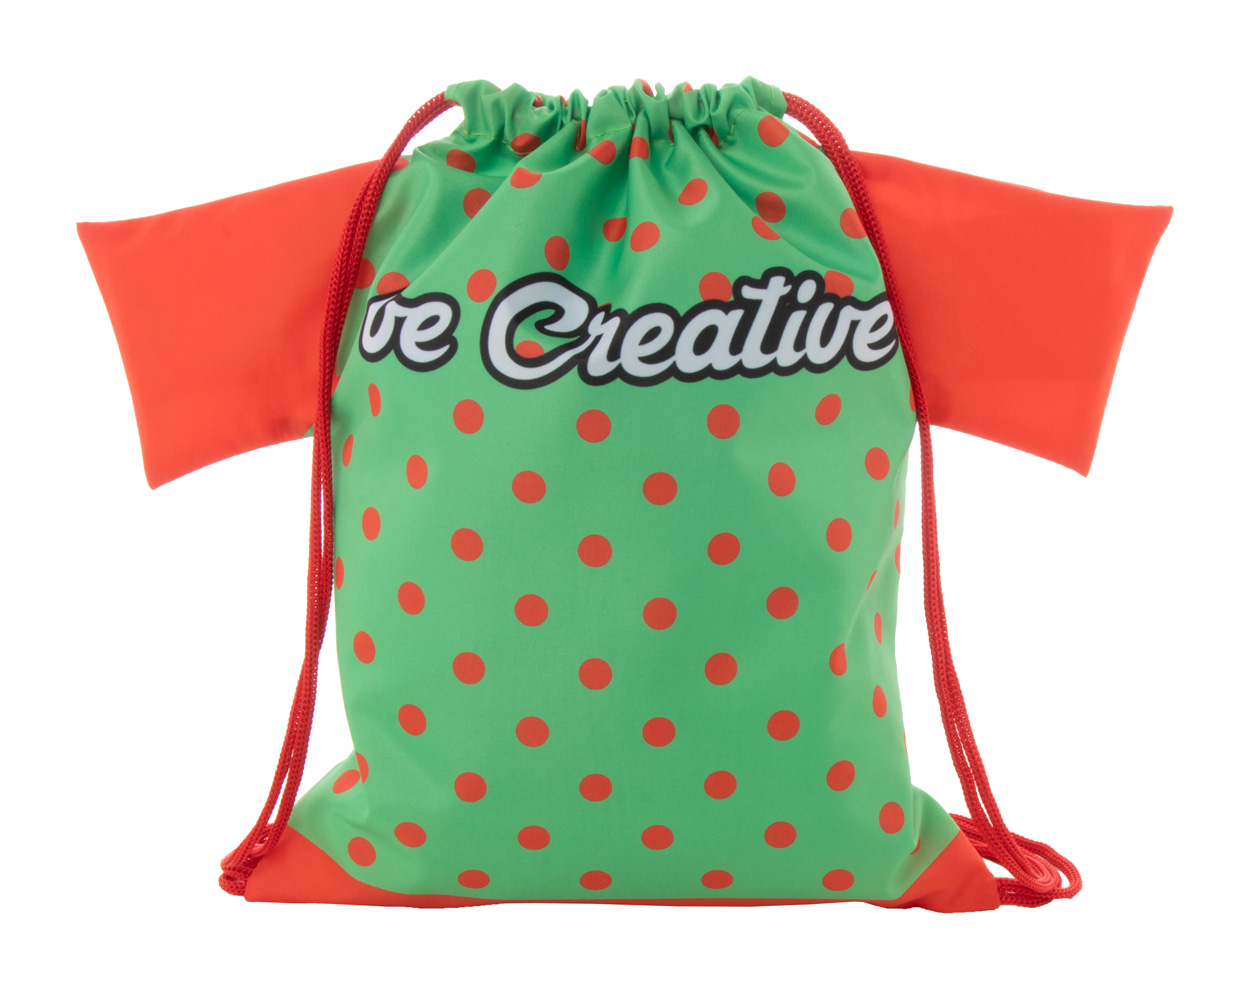 CreaDraw T Kids drawstring bag for children - red